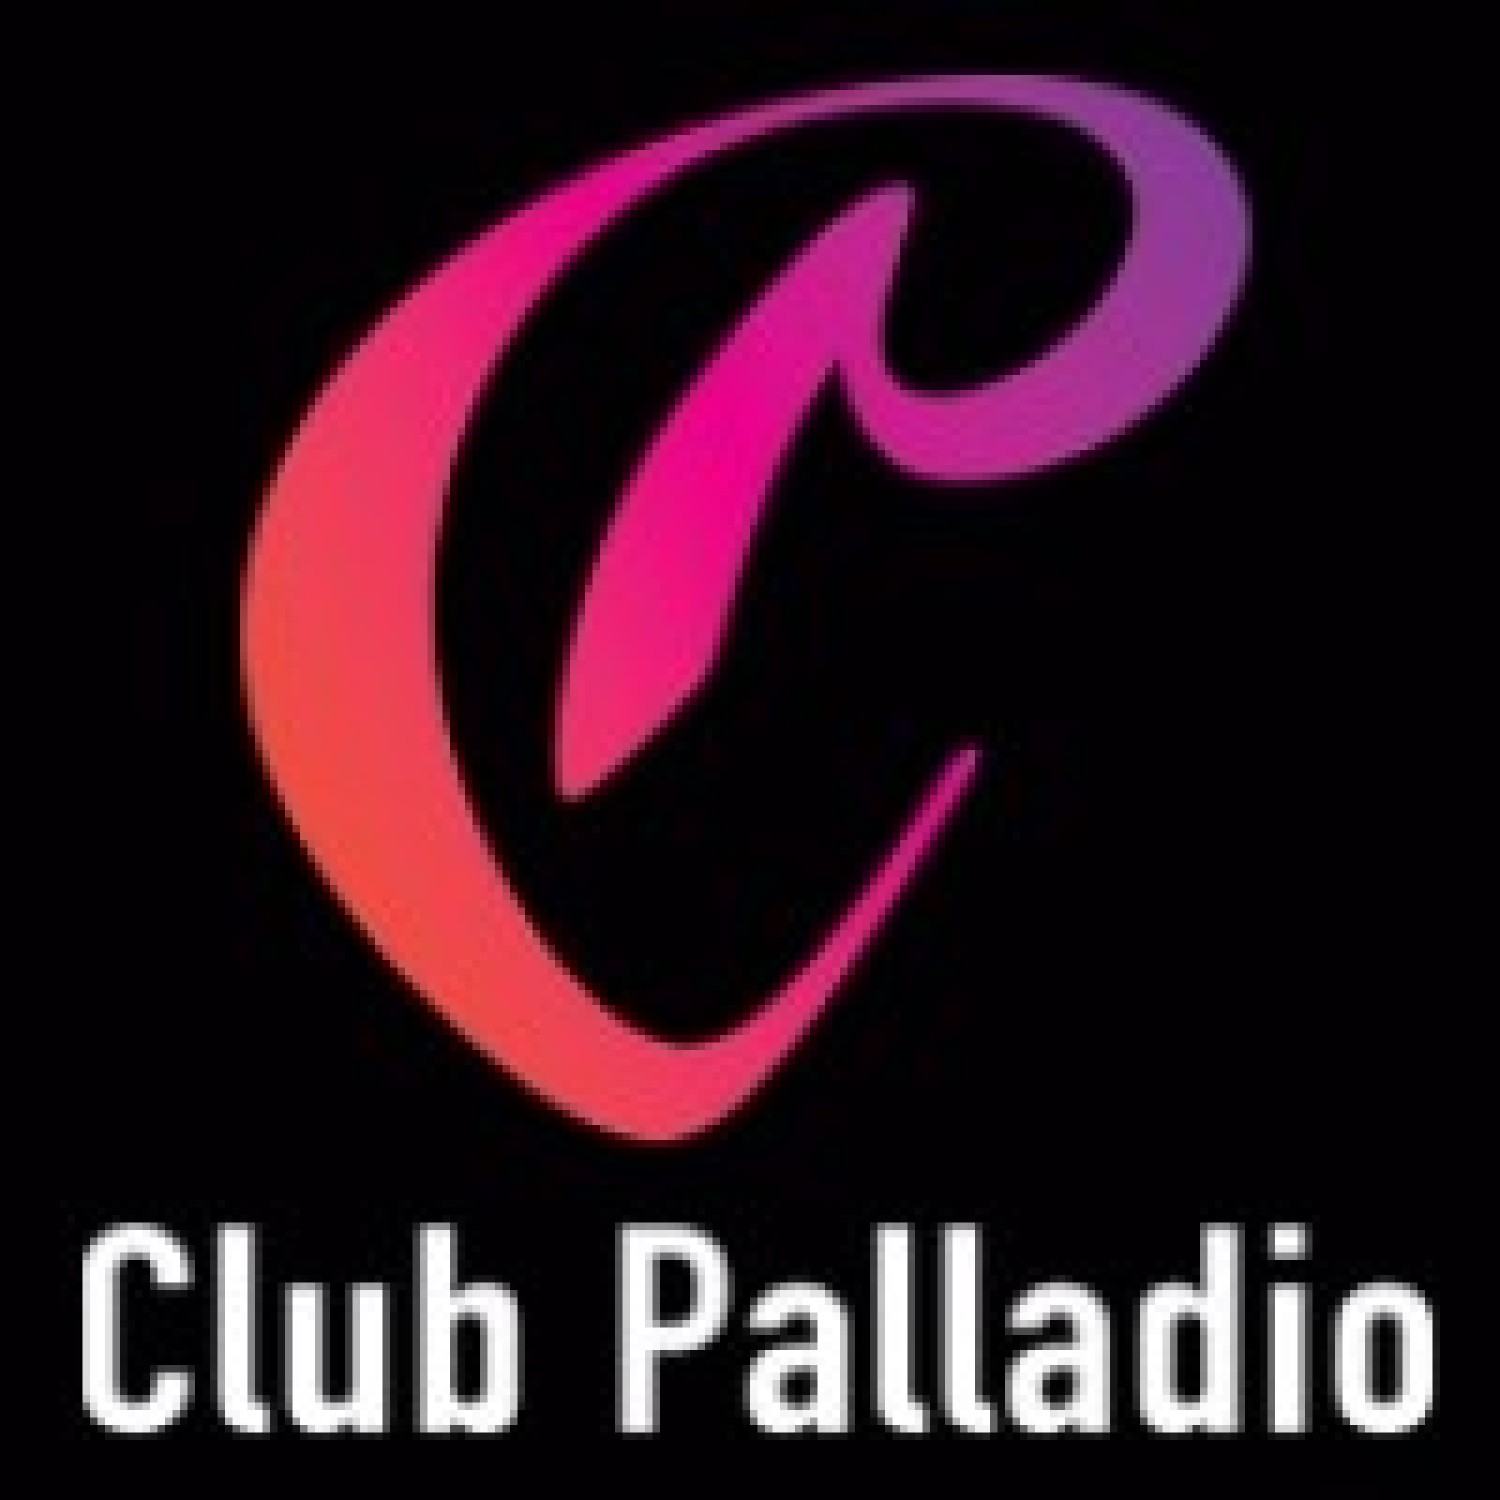 Club Palladio